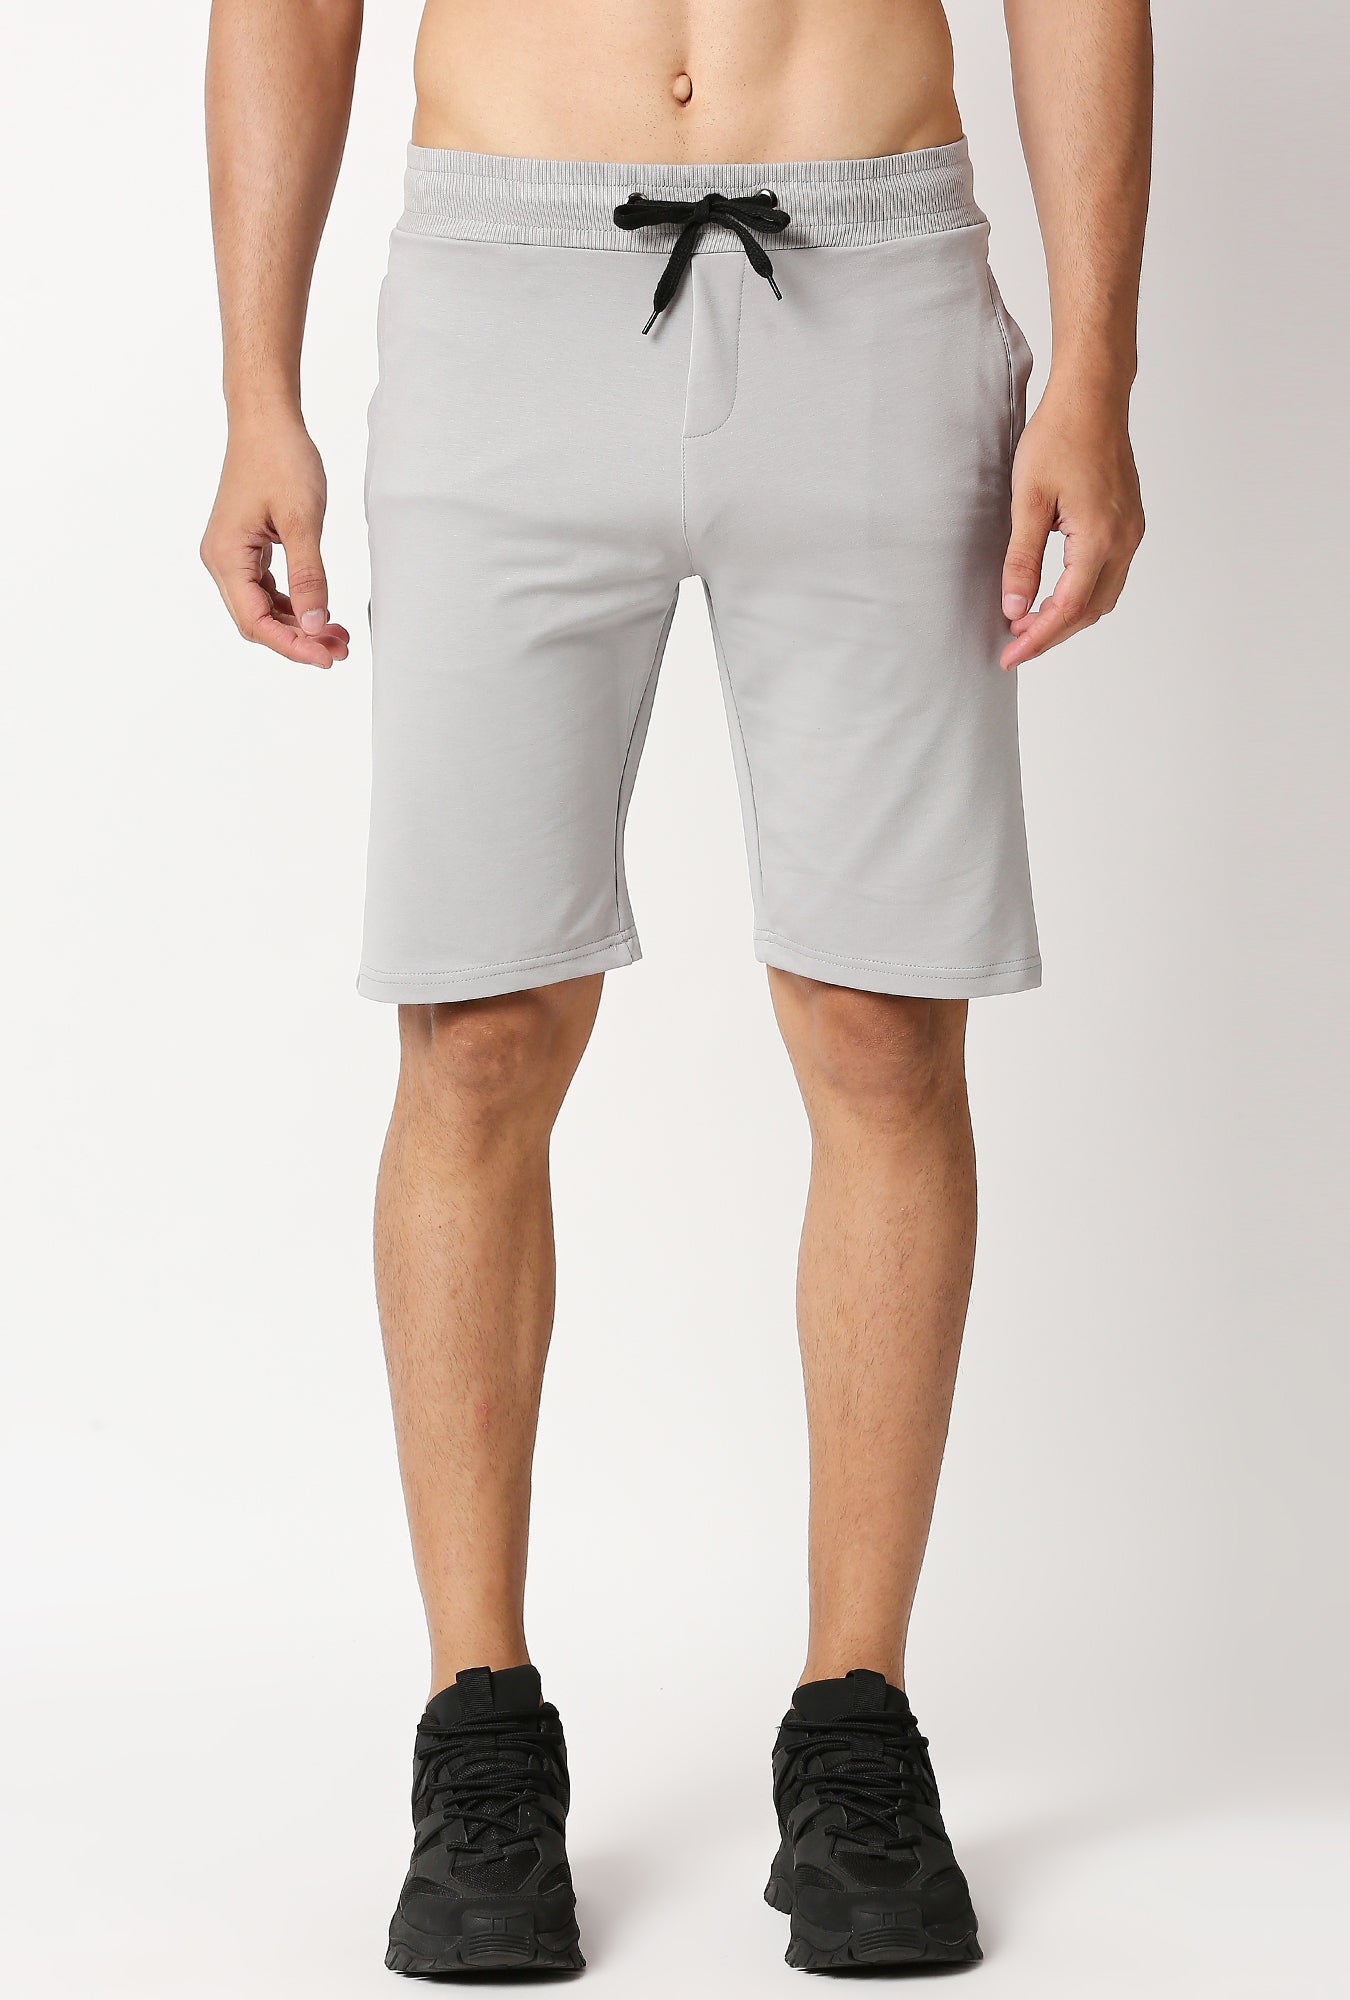 Fostino Shanghai Plain Grey Short - Fostino - Shorts